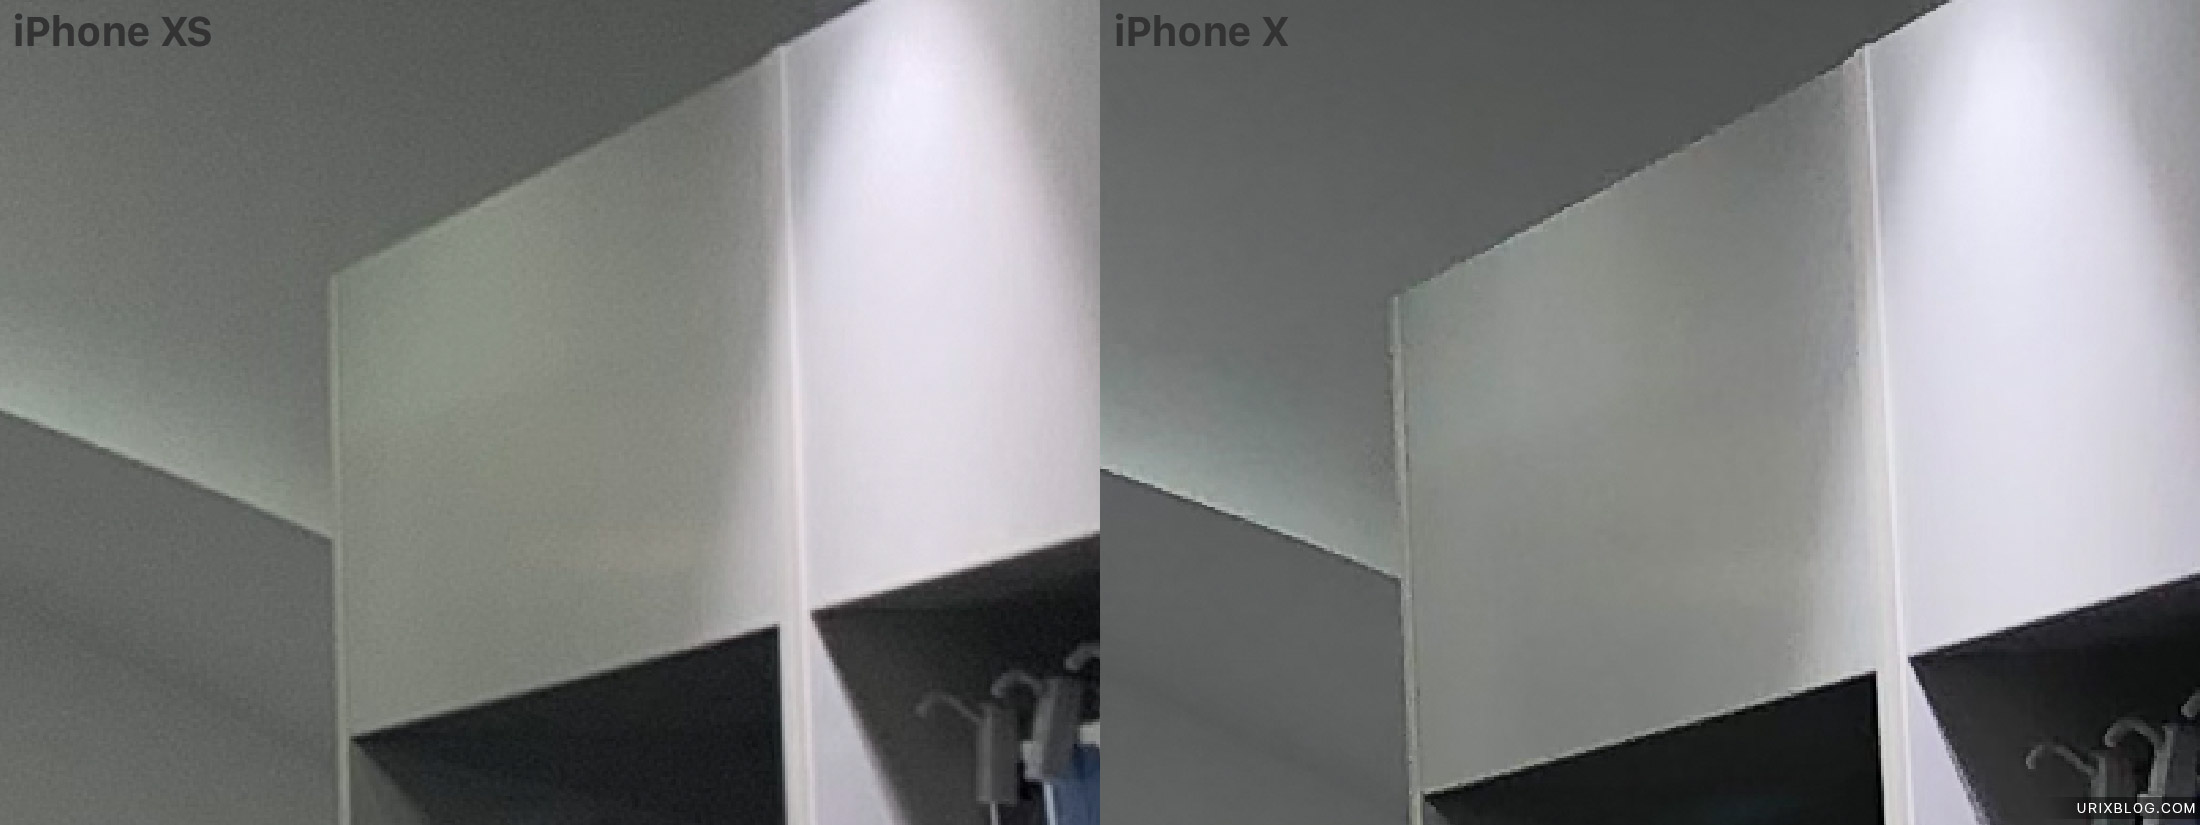 iPhone XS, iPhone X, Apple, camera, comparison, review, details